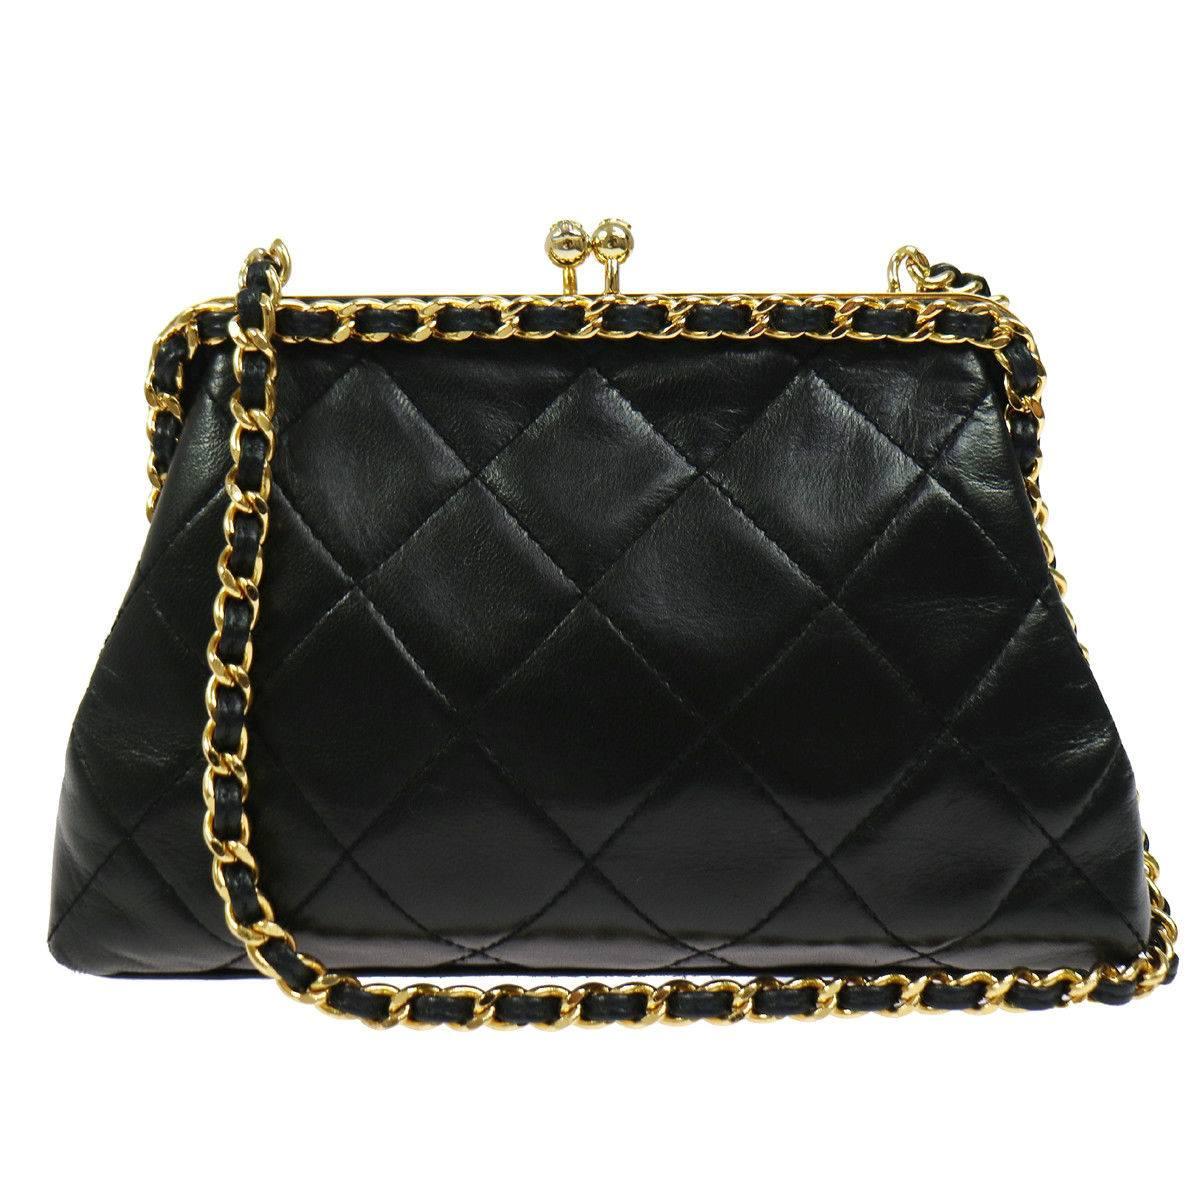 Chanel Black Lambskin Wraparound KissLock Party Evening Shoulder Bag in Box